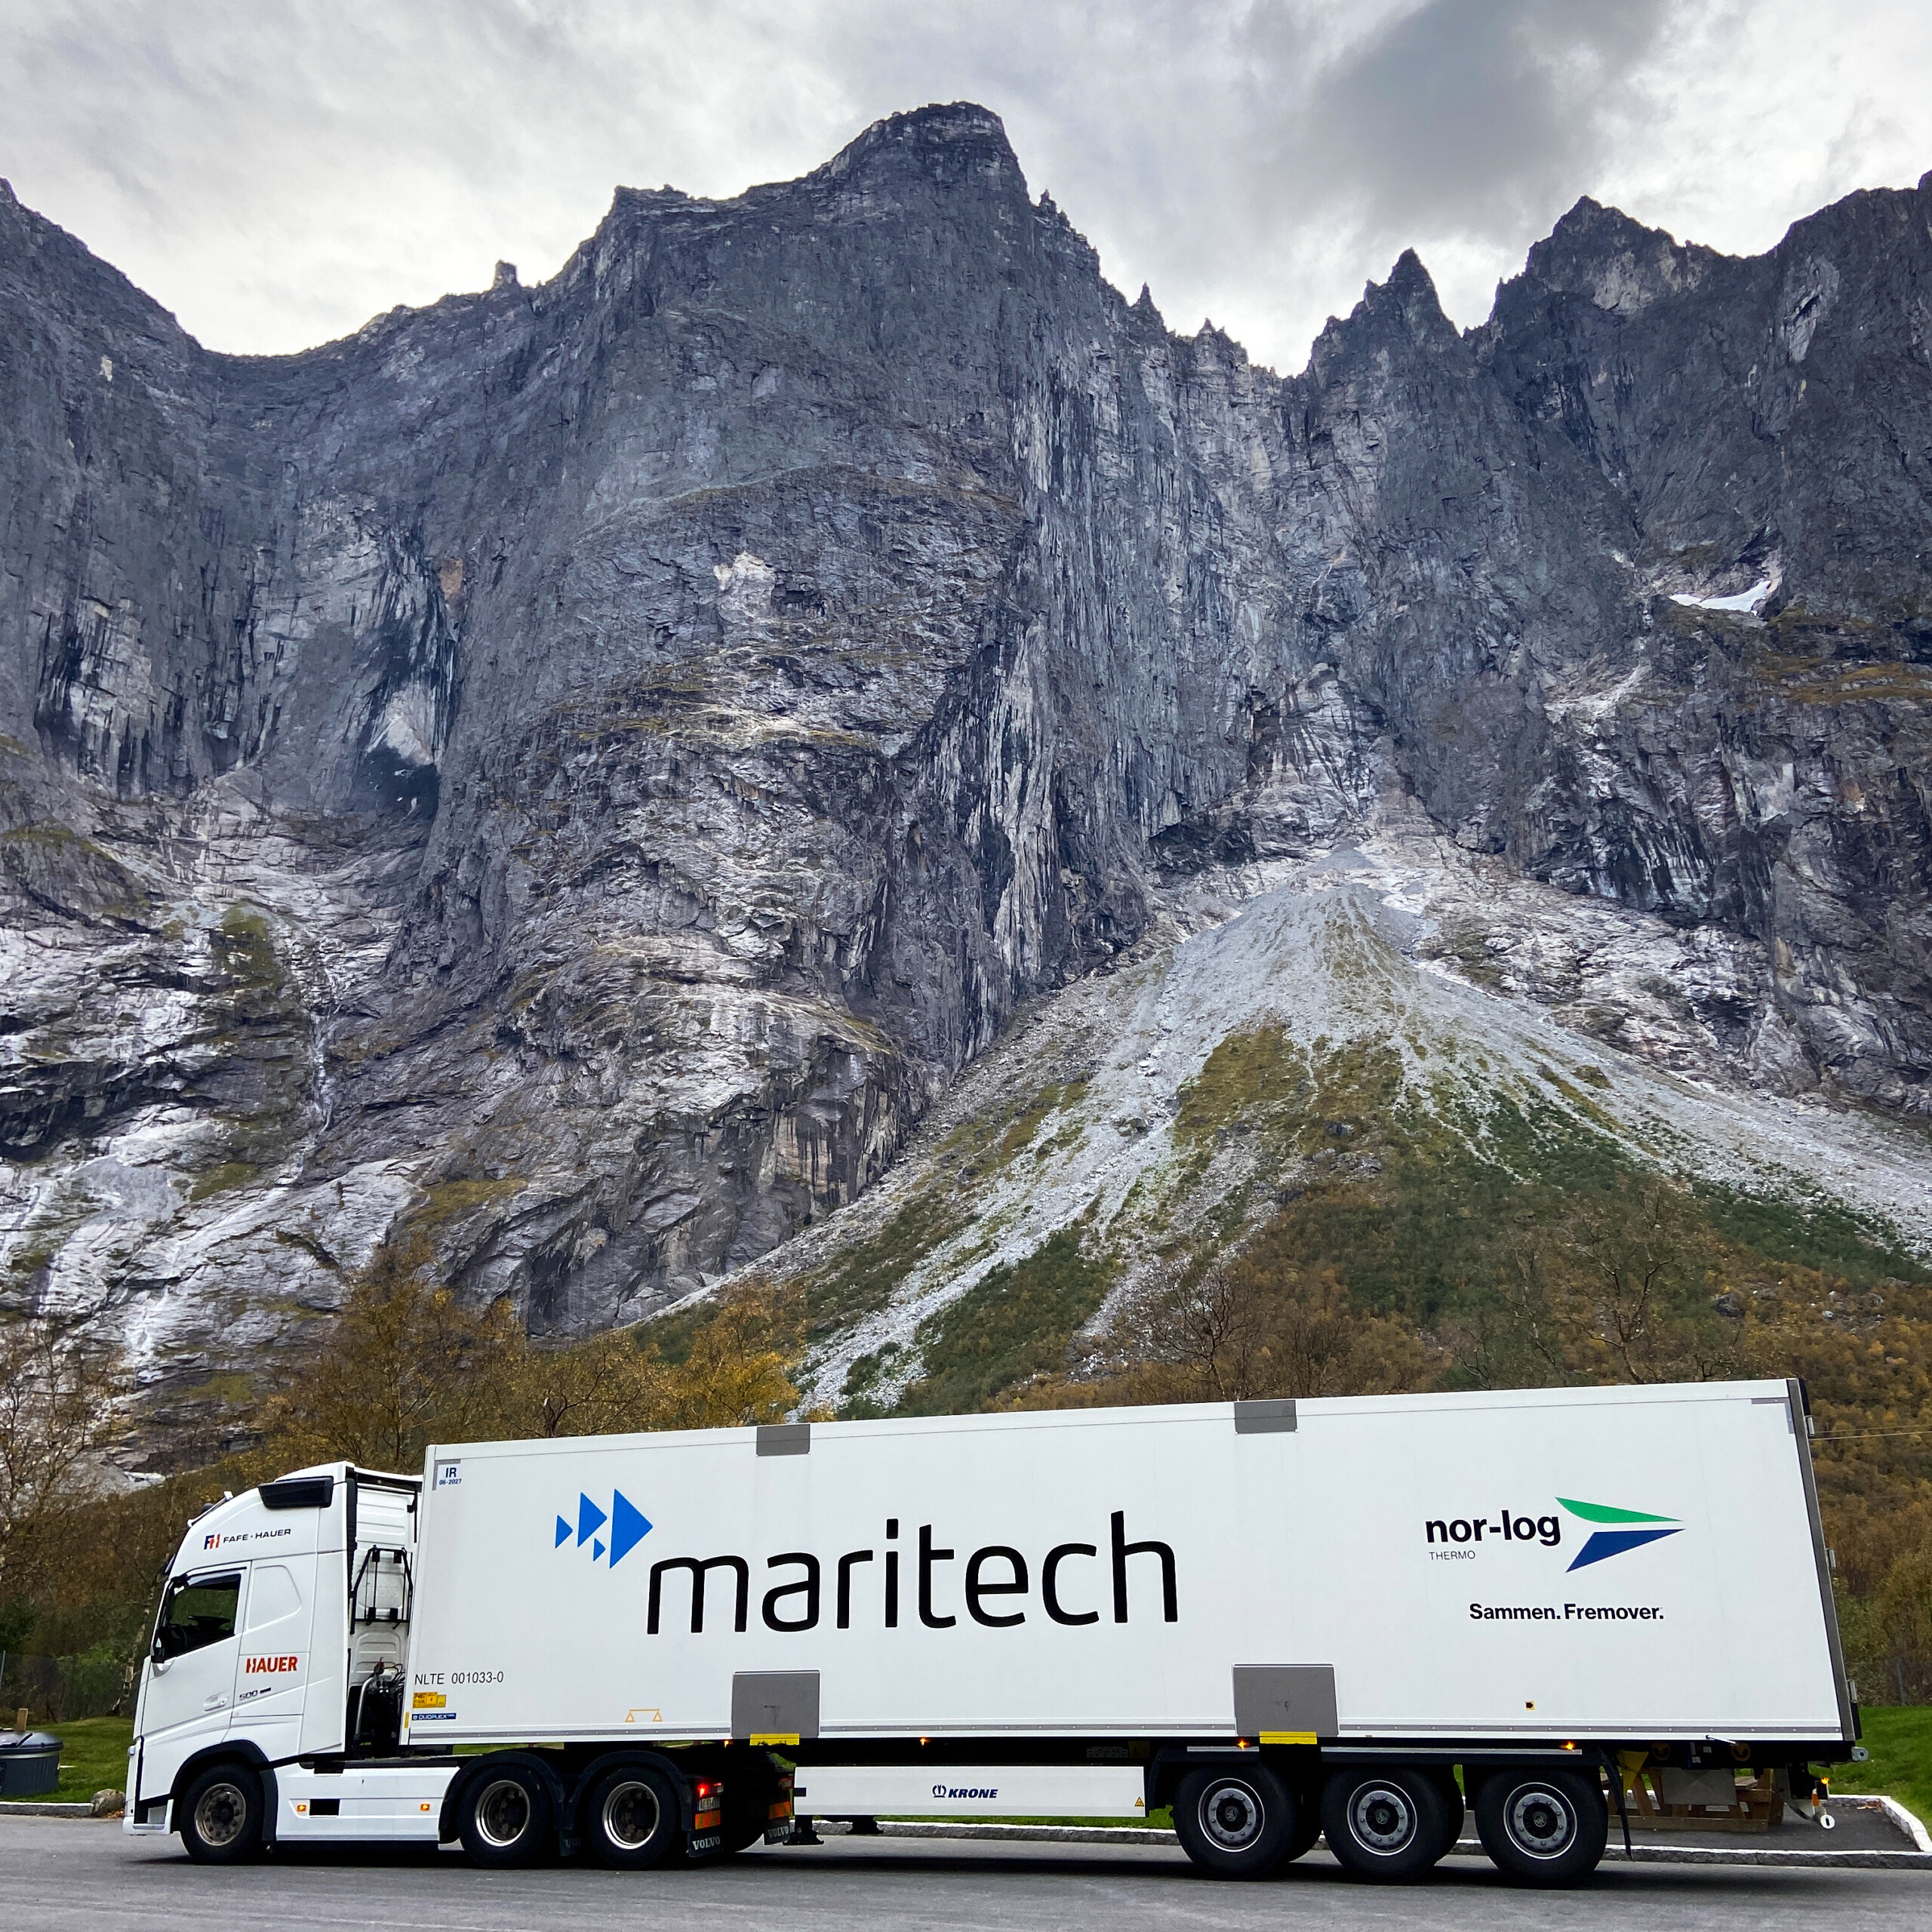 Nor-log Group chose Maritech as logistics sooftware partner